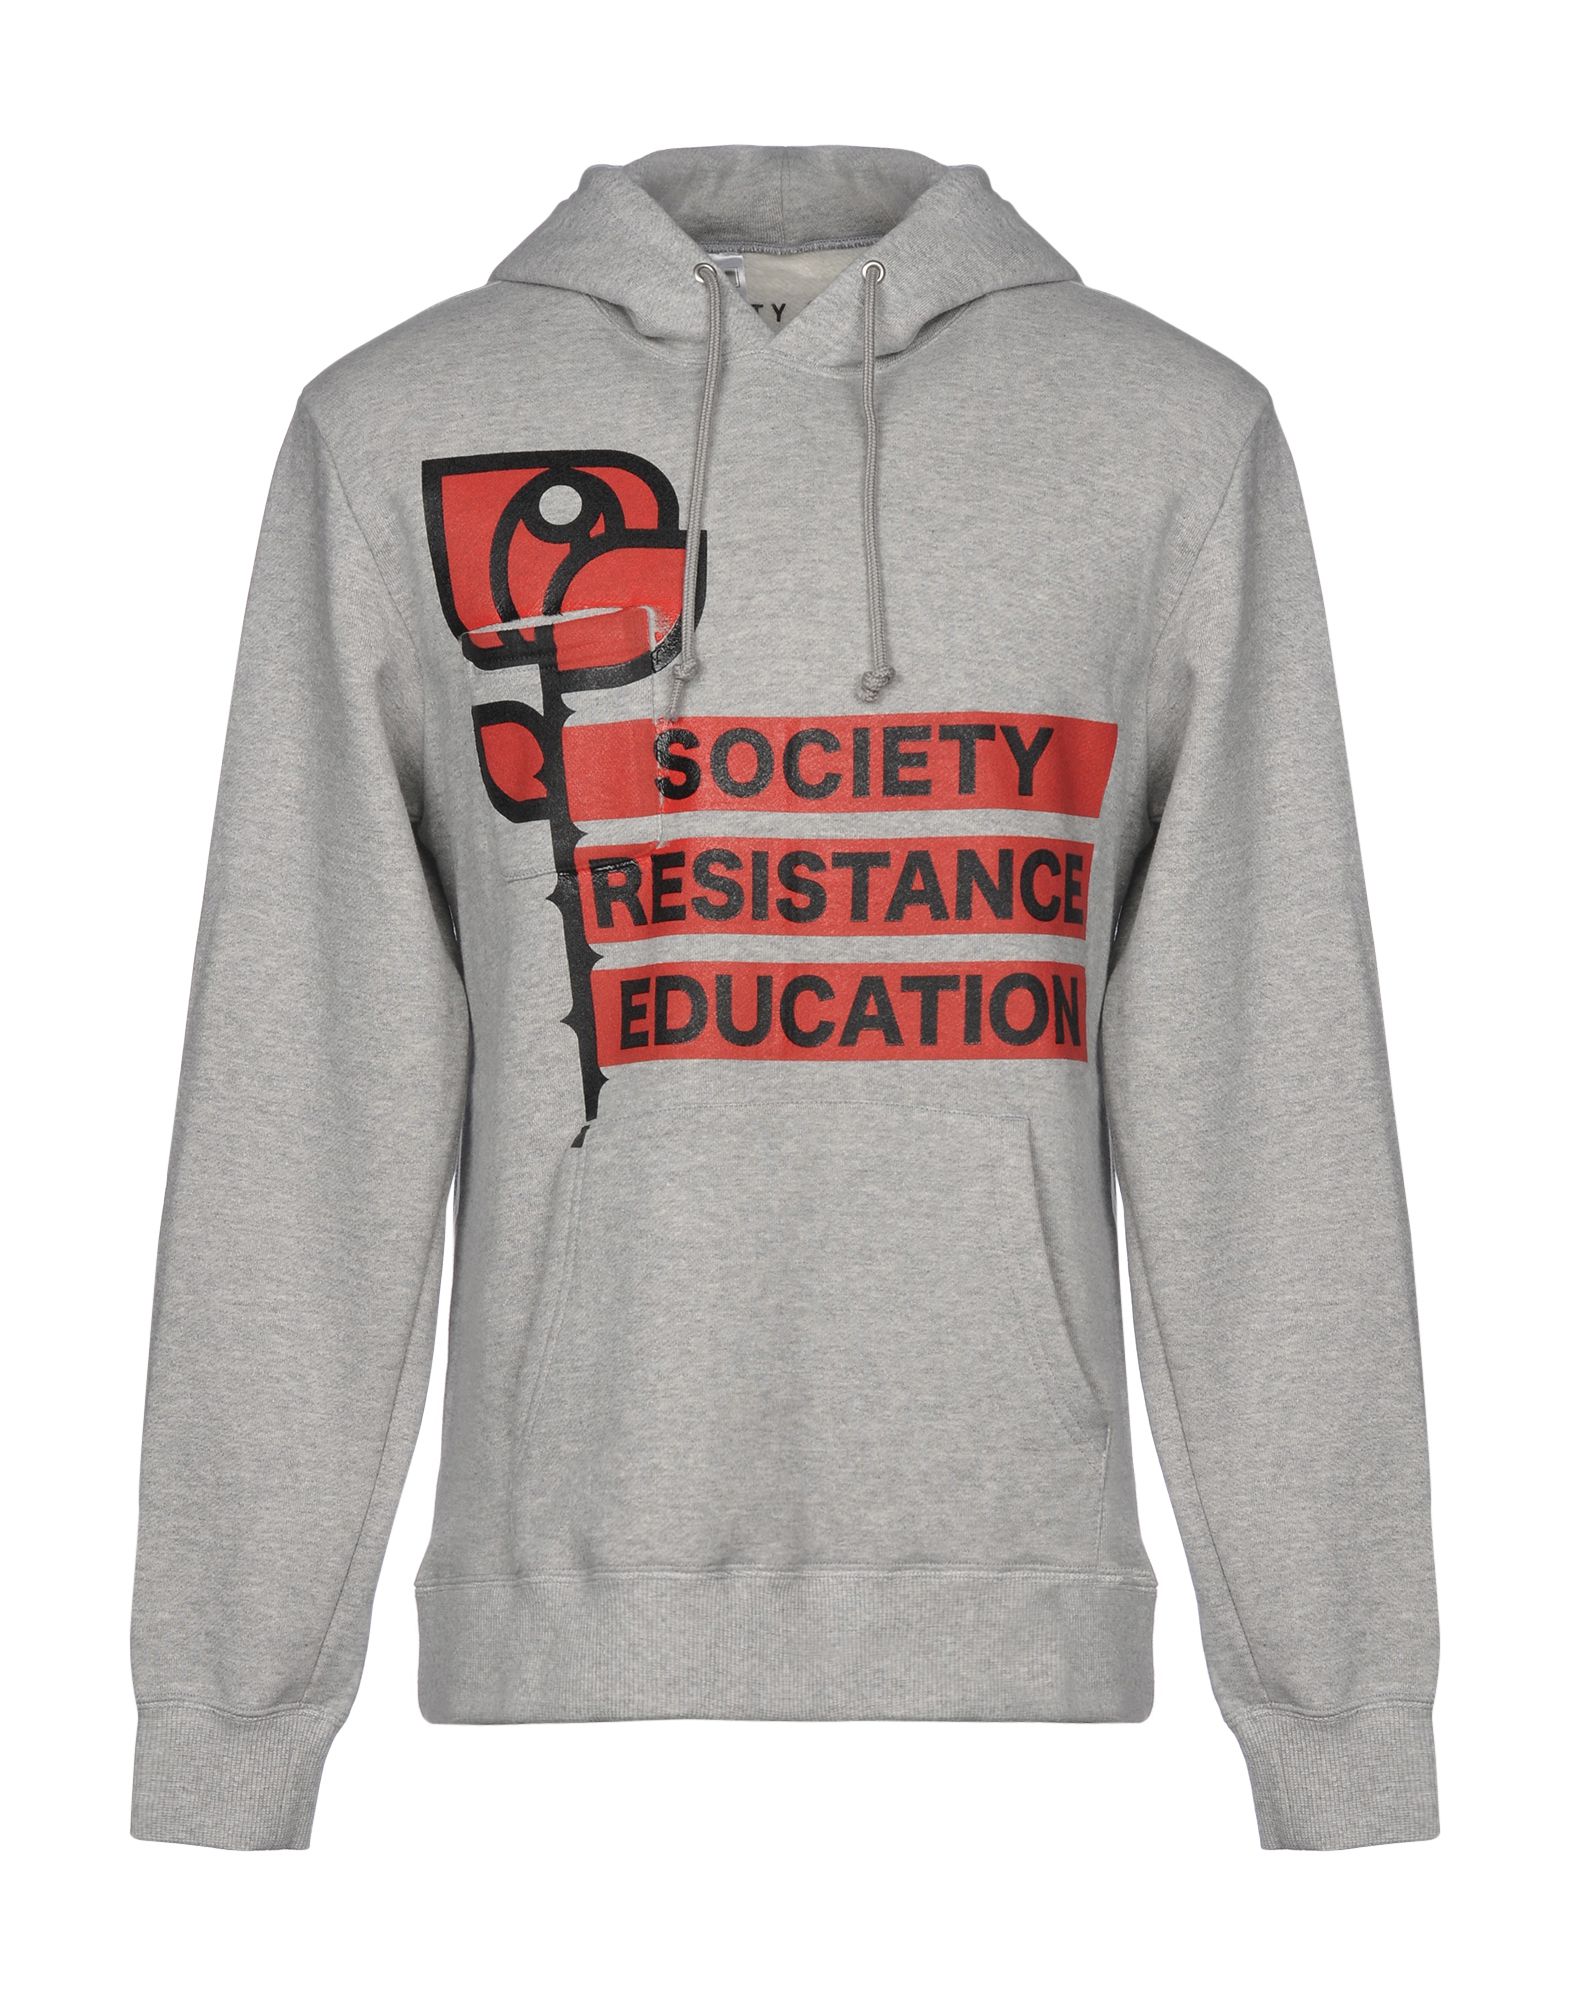 Society купить. Society одежда. Society Hoodie. Eastwood Society кофта. Интеллигентное общество кофта.